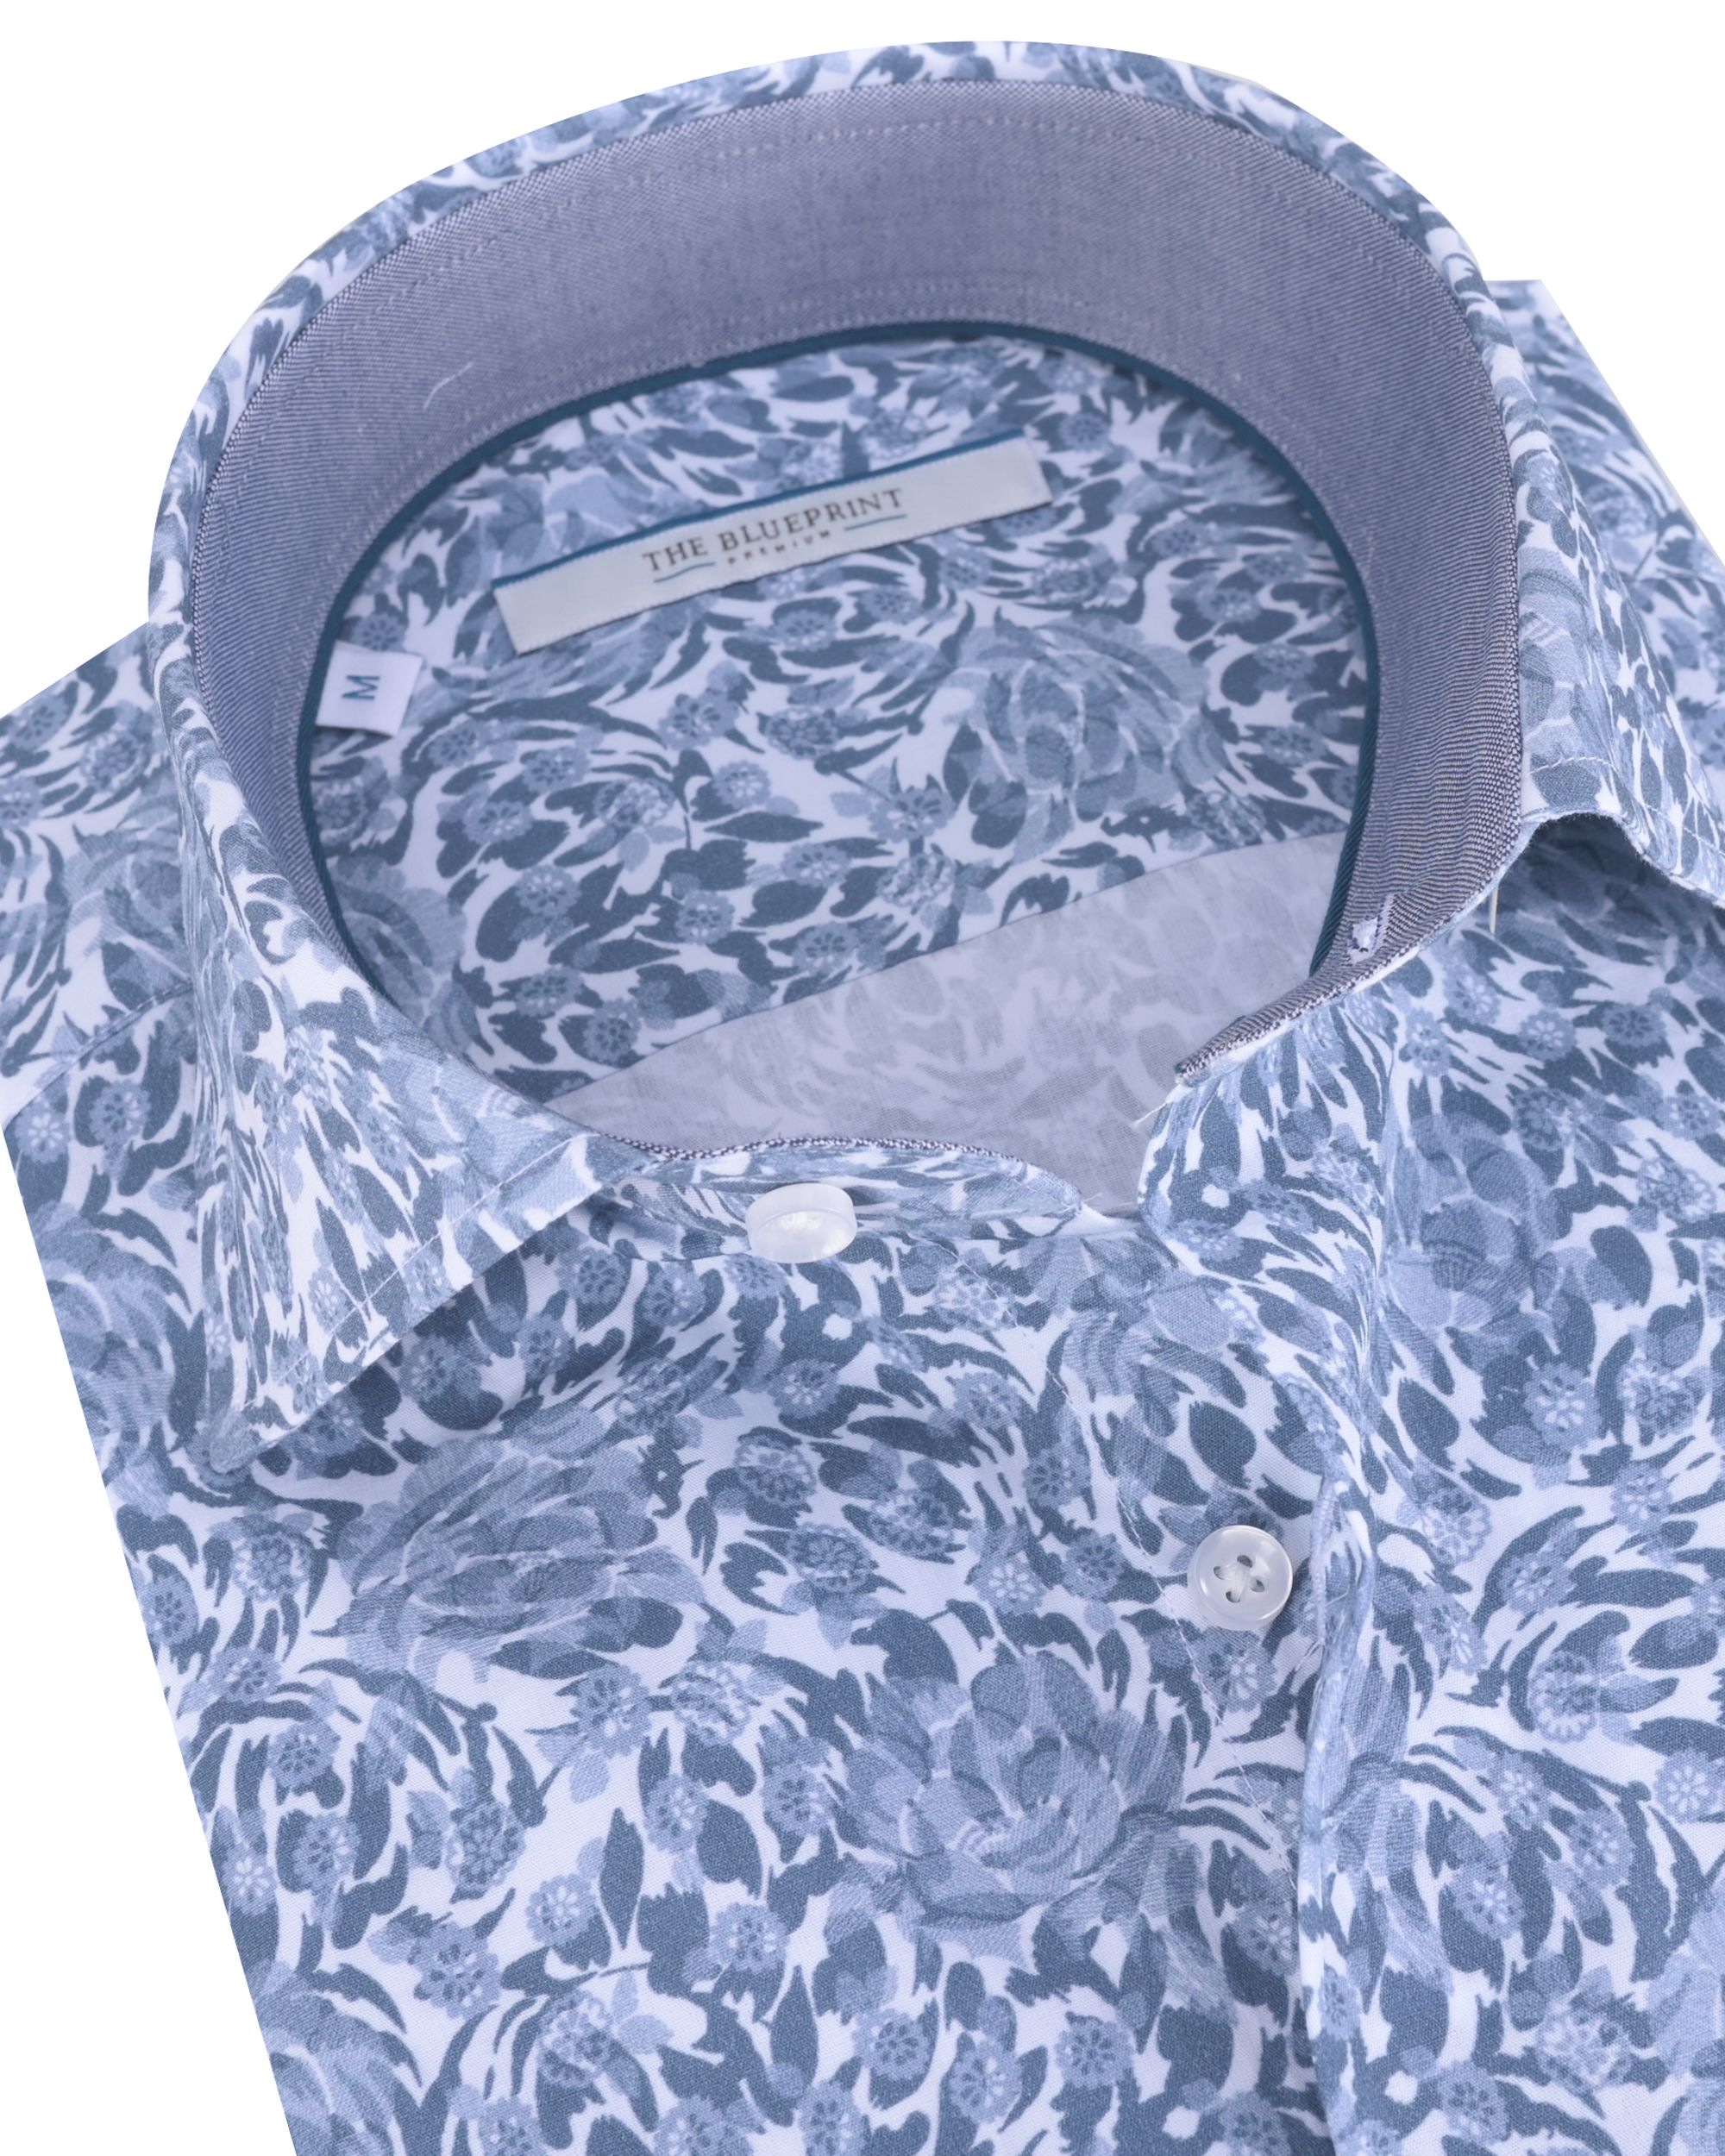 The Blueprint Premium - Trendy overhemd LM Blauw dessin 086639-001-L